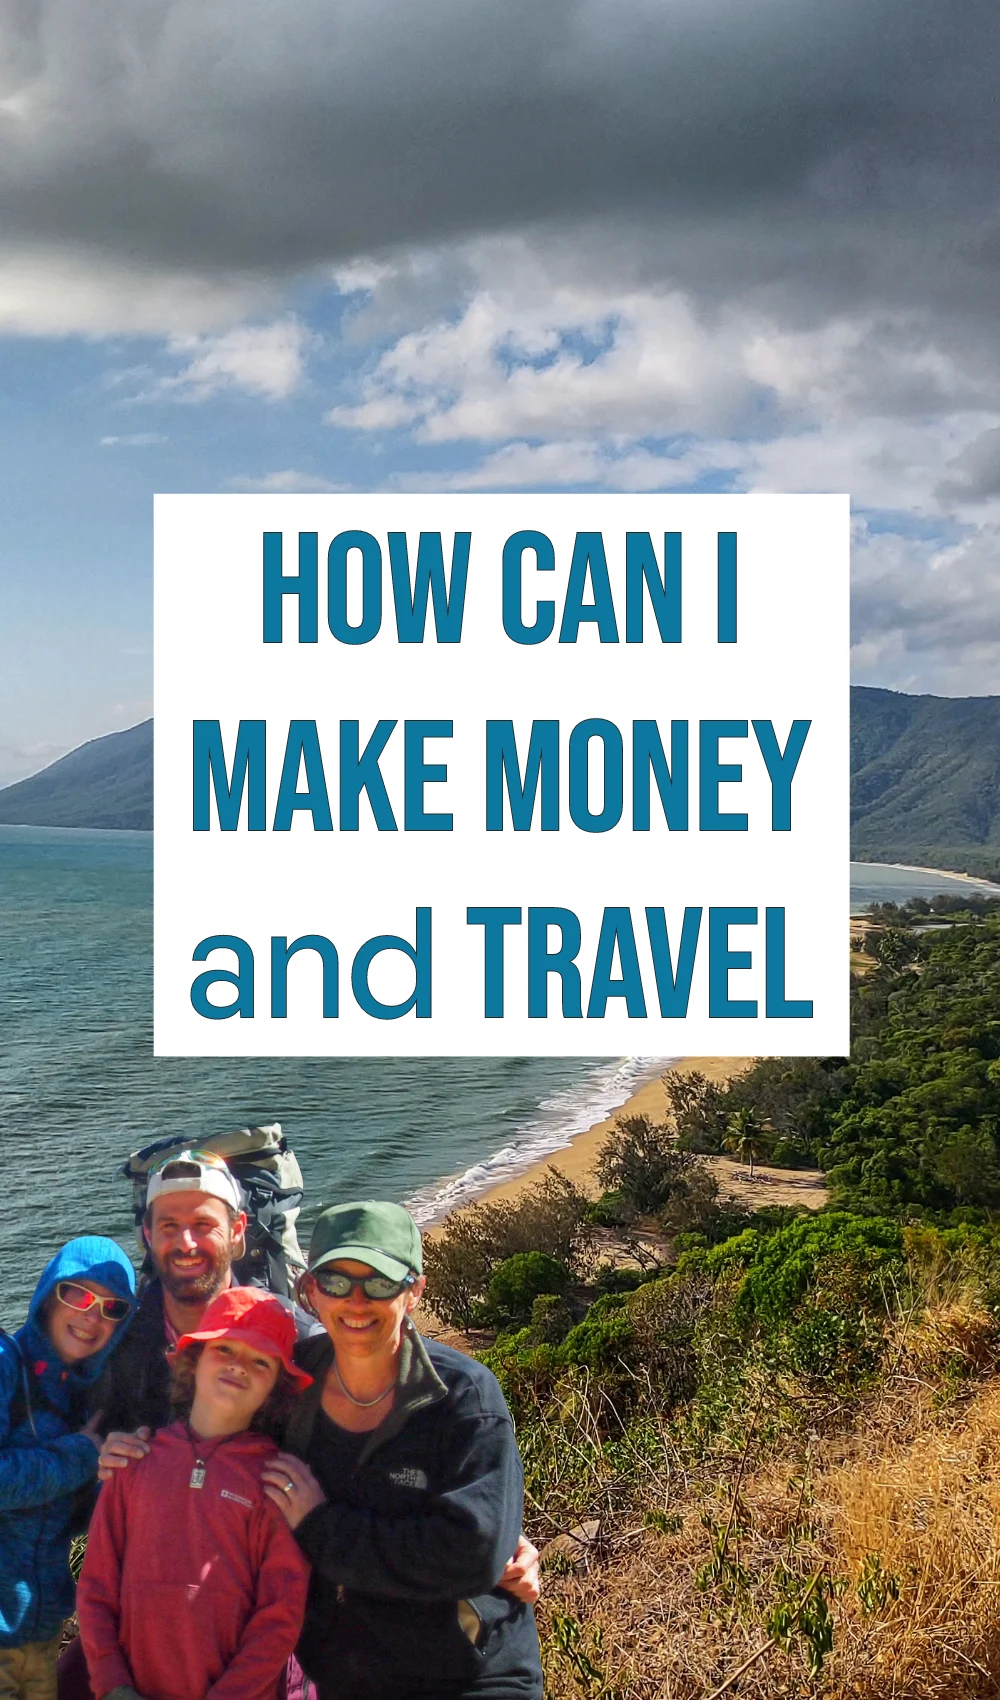 Make money and travel